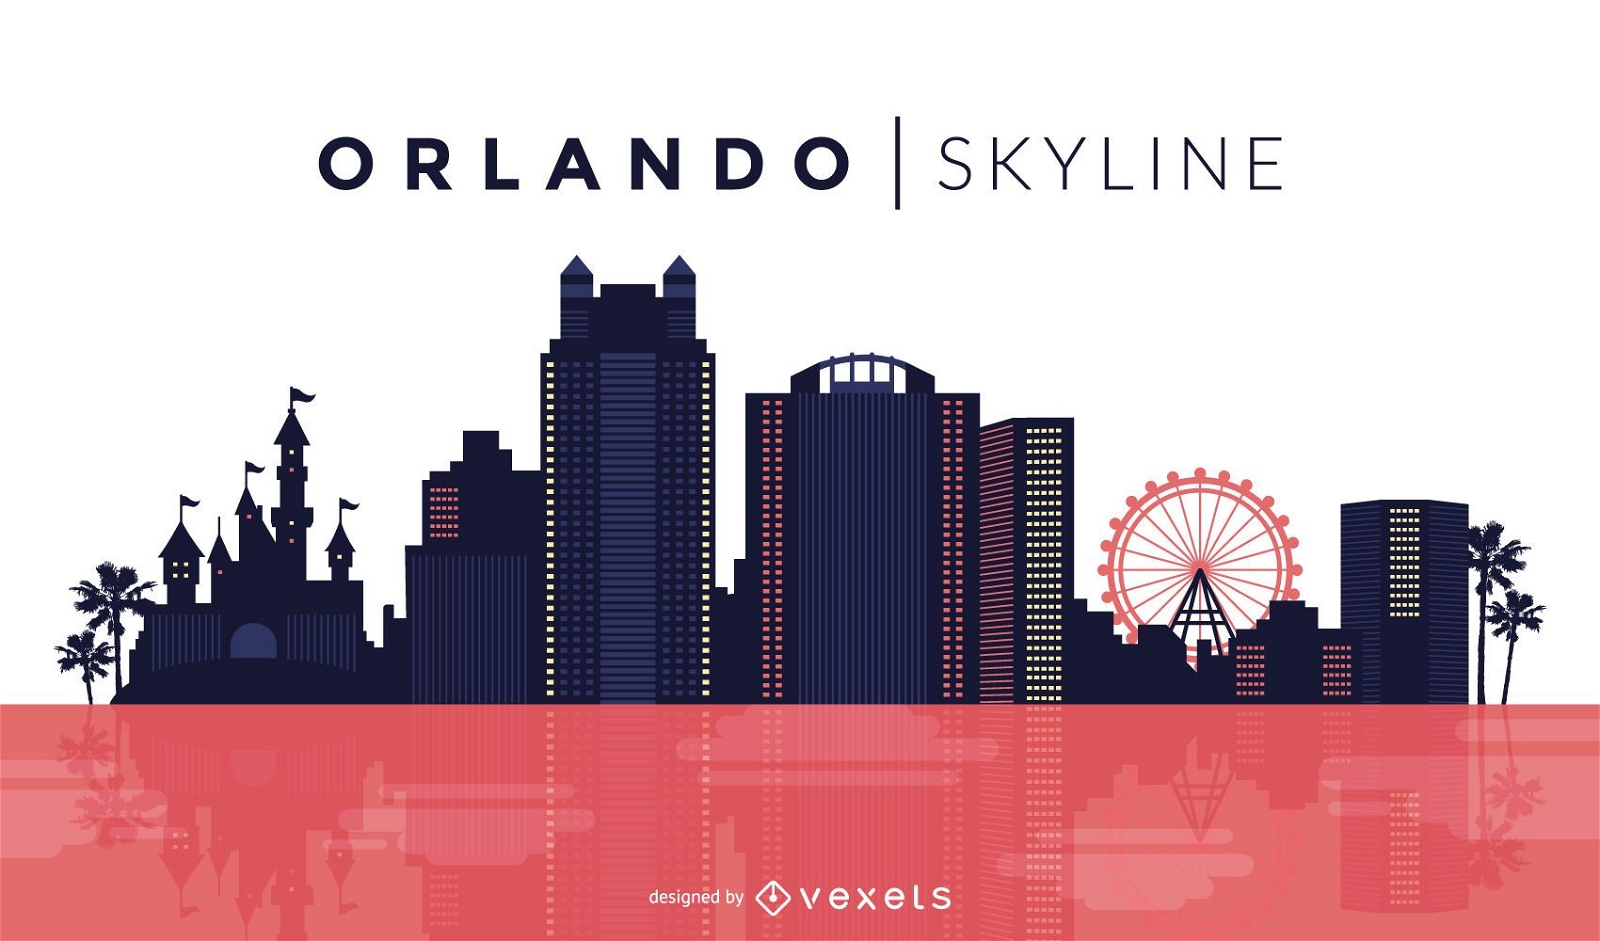 Orlando skyline design